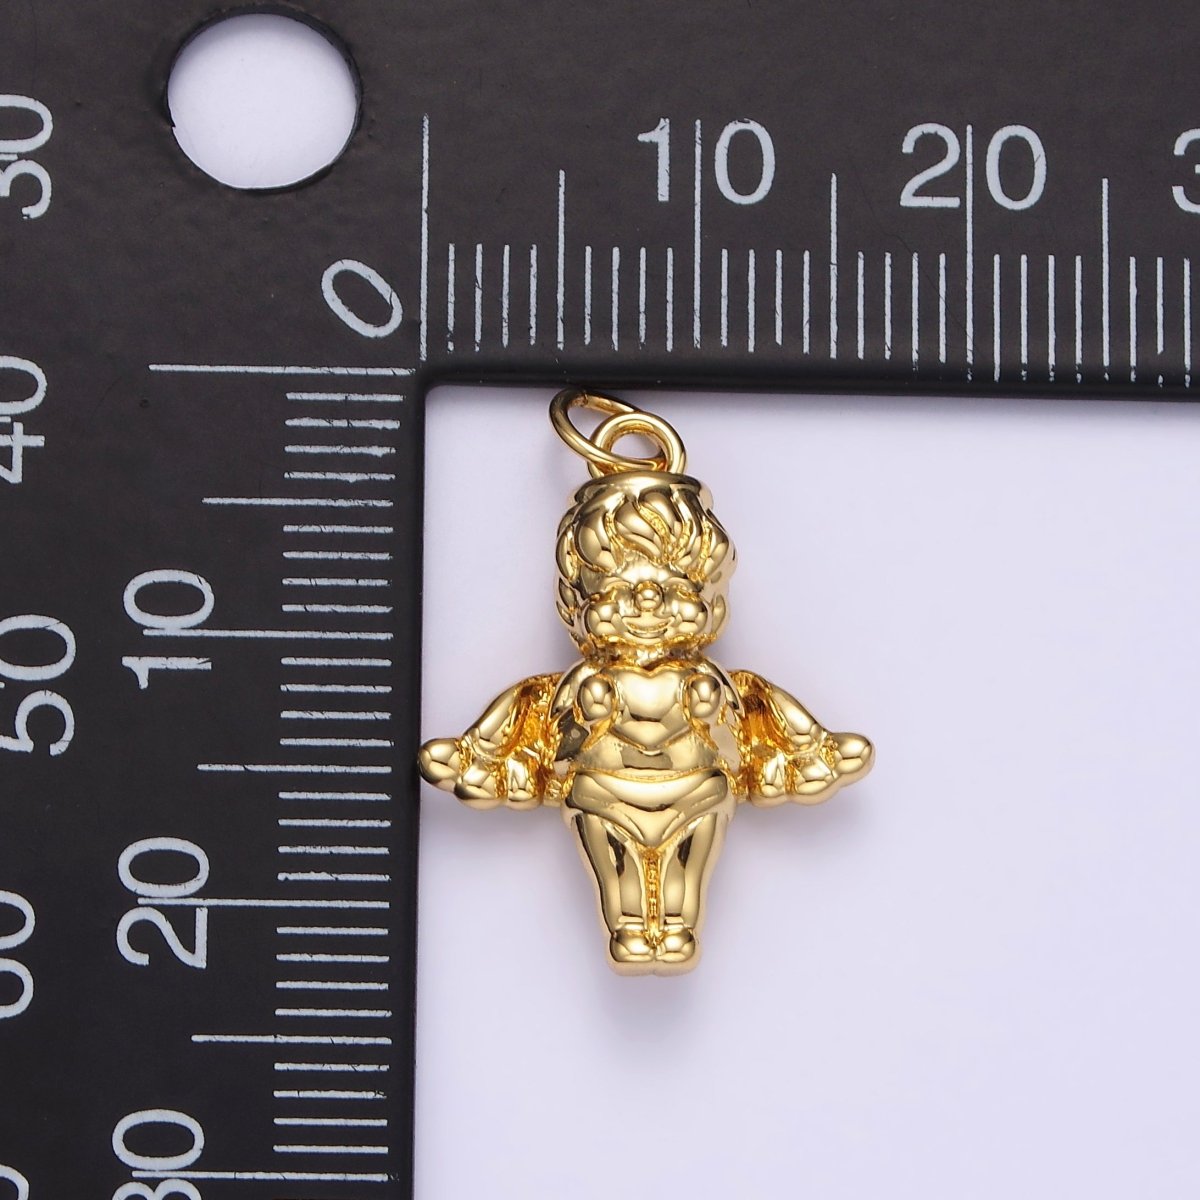 14K Gold Filled 16.5mm Standing Cherub Baby Angel Puffed Charm in Silver & Gold | N1511 N1512 - DLUXCA